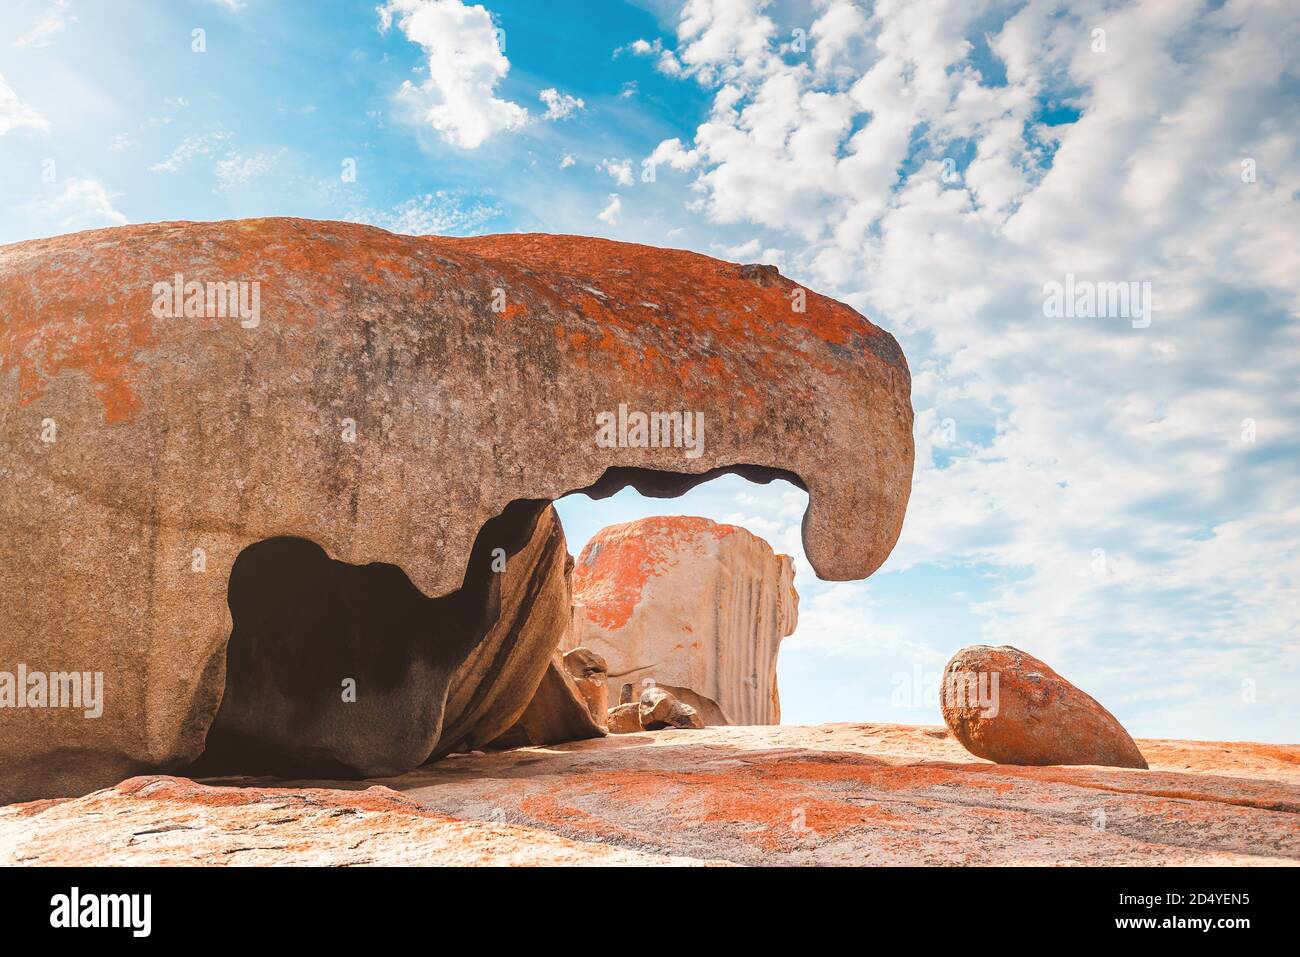 Iconiche Remarkable Rocks su Kangaroo Island, Australia Meridionale Foto Stock